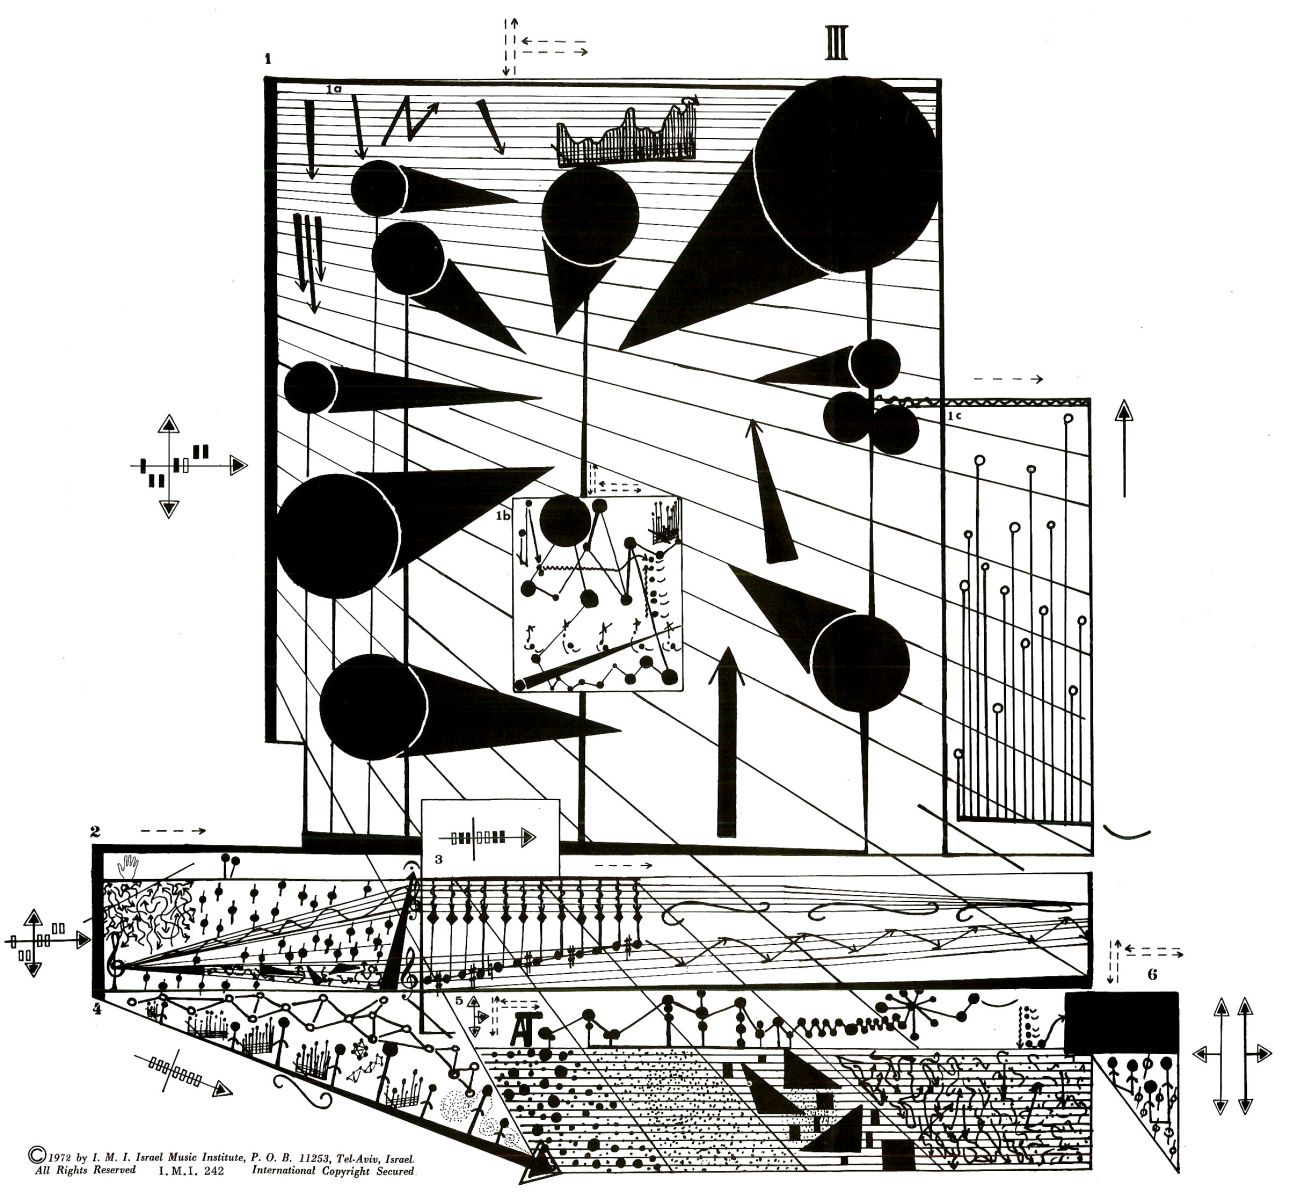 Koloth, graphic score by Leon Schidlowsky, Tel Aviv, 1973. Collection Mildonian E03242.